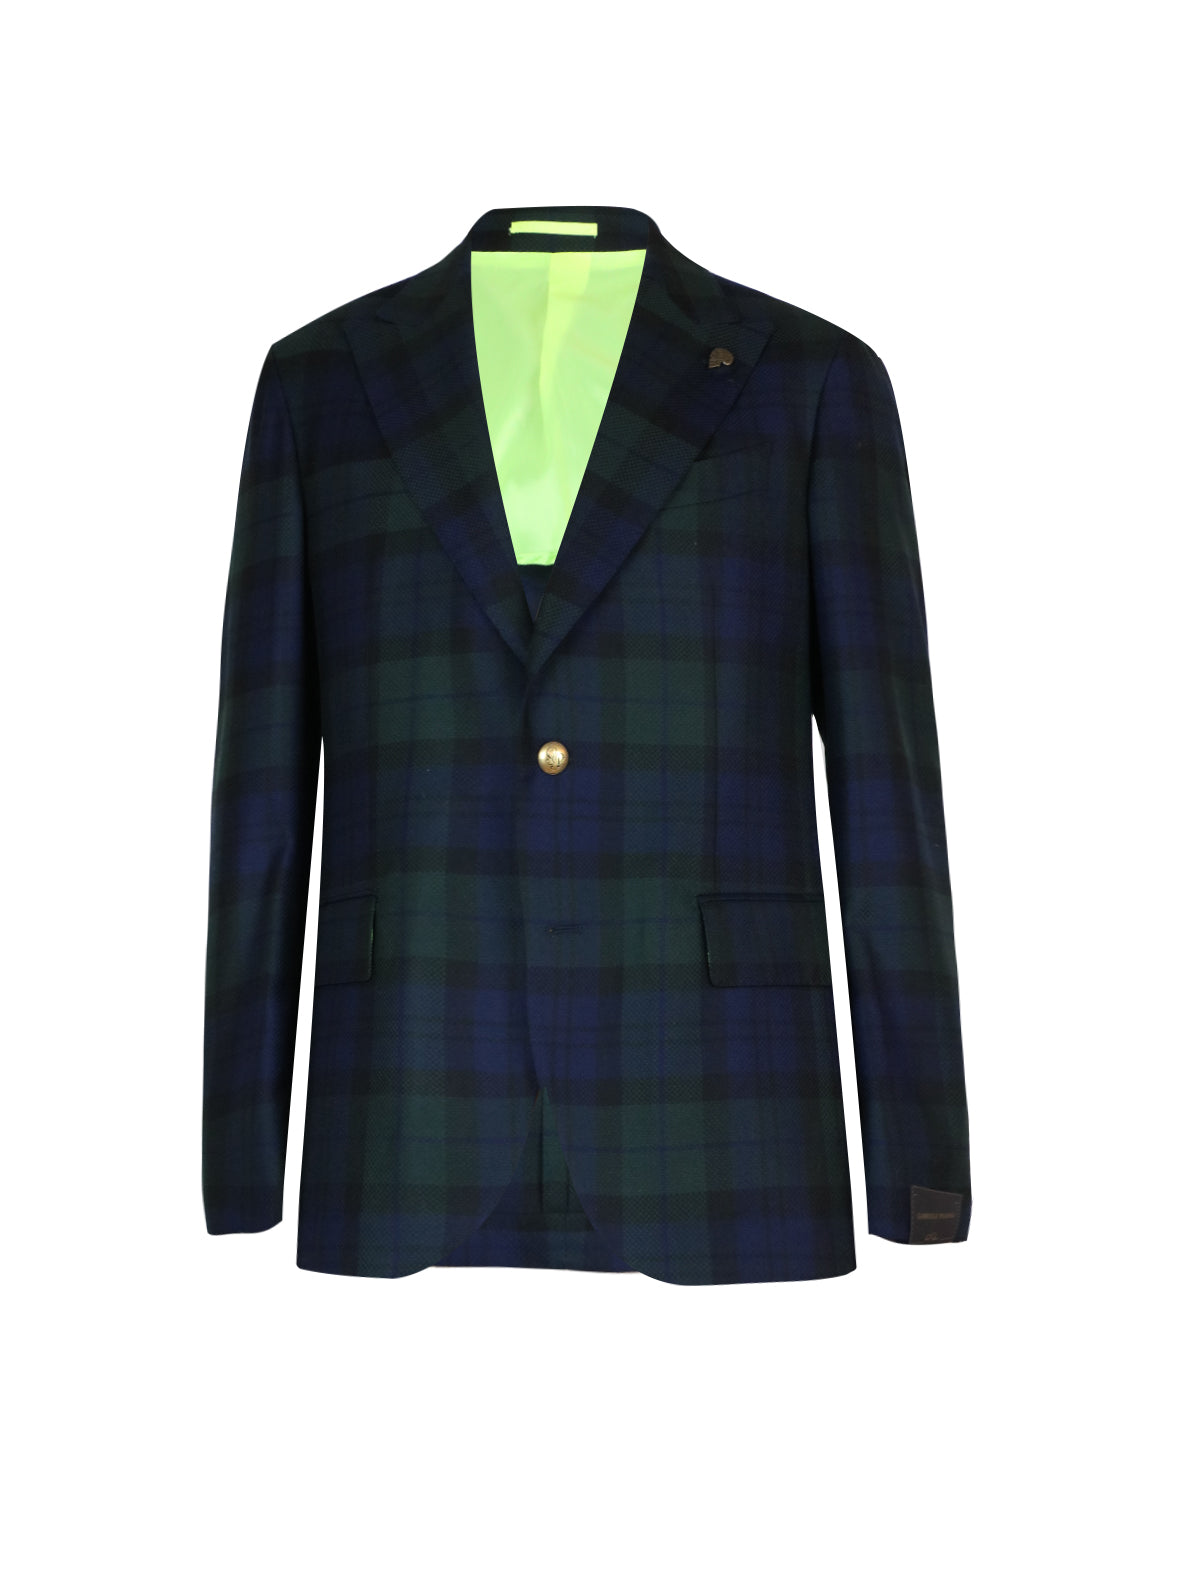 Gabriele Pasini Checkered Wool Blazer in Green/Navy